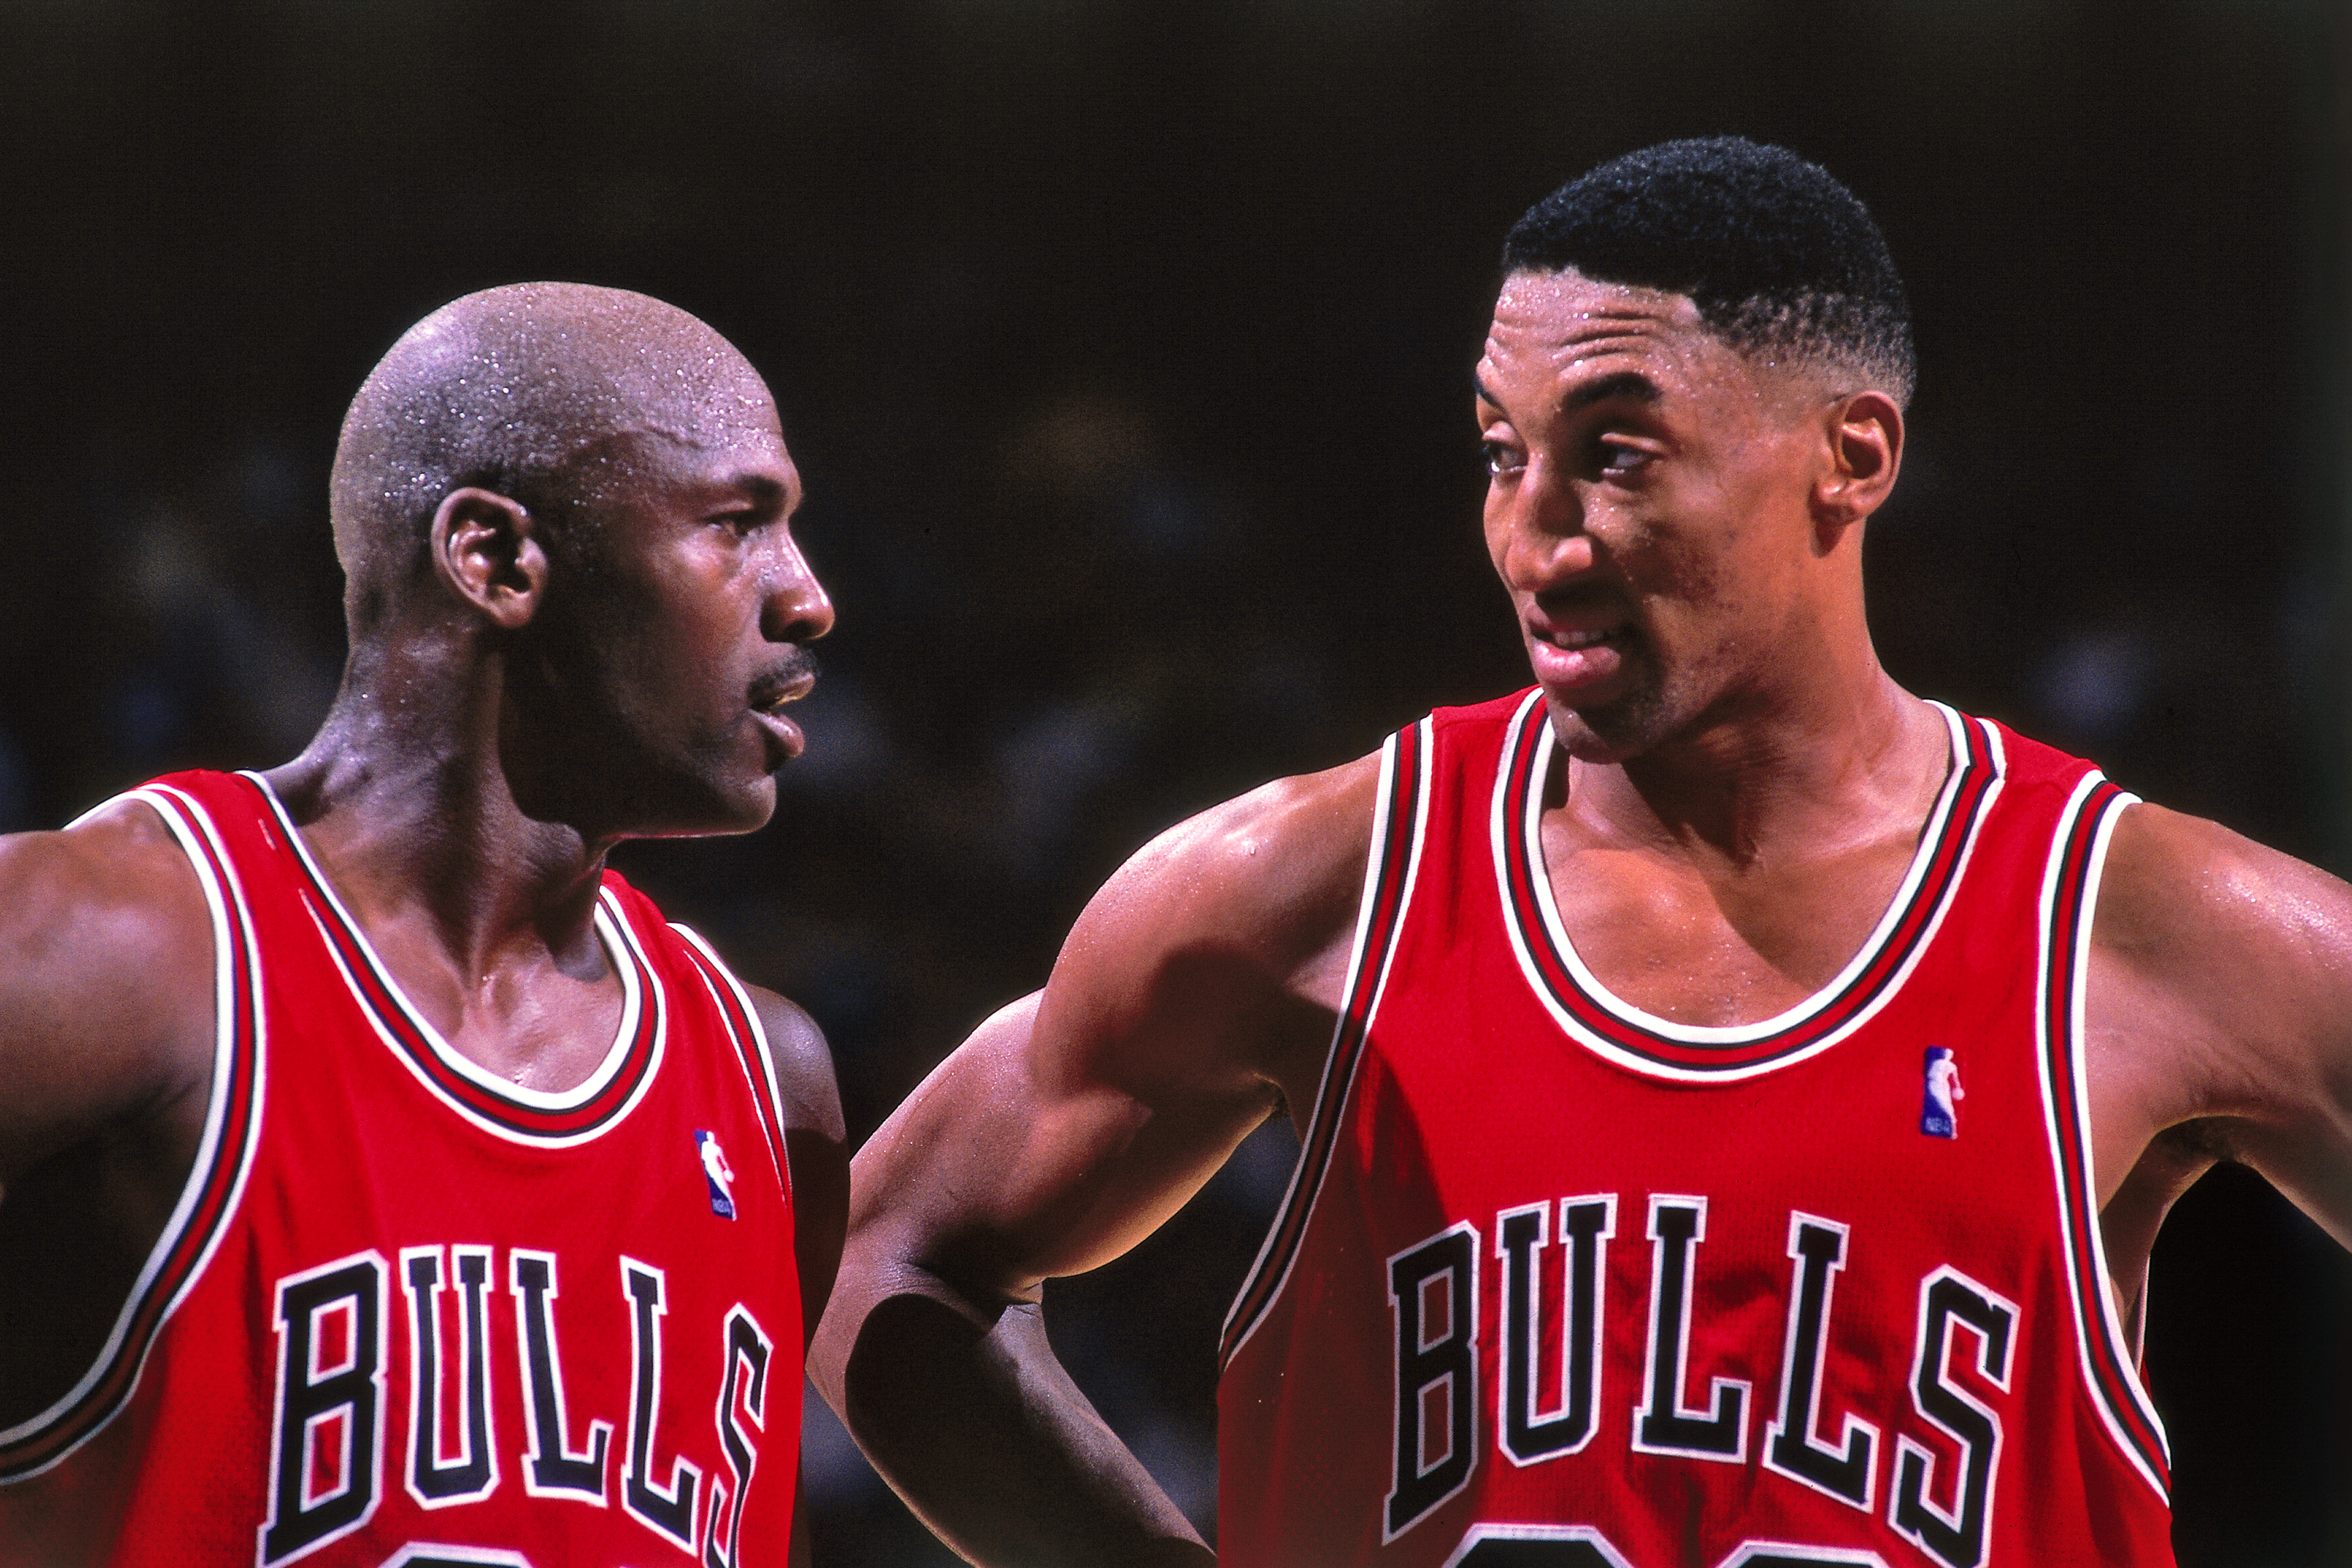 Bulls uniforms will carry Michael Jordan's Jumpman logo - Chicago Sun-Times